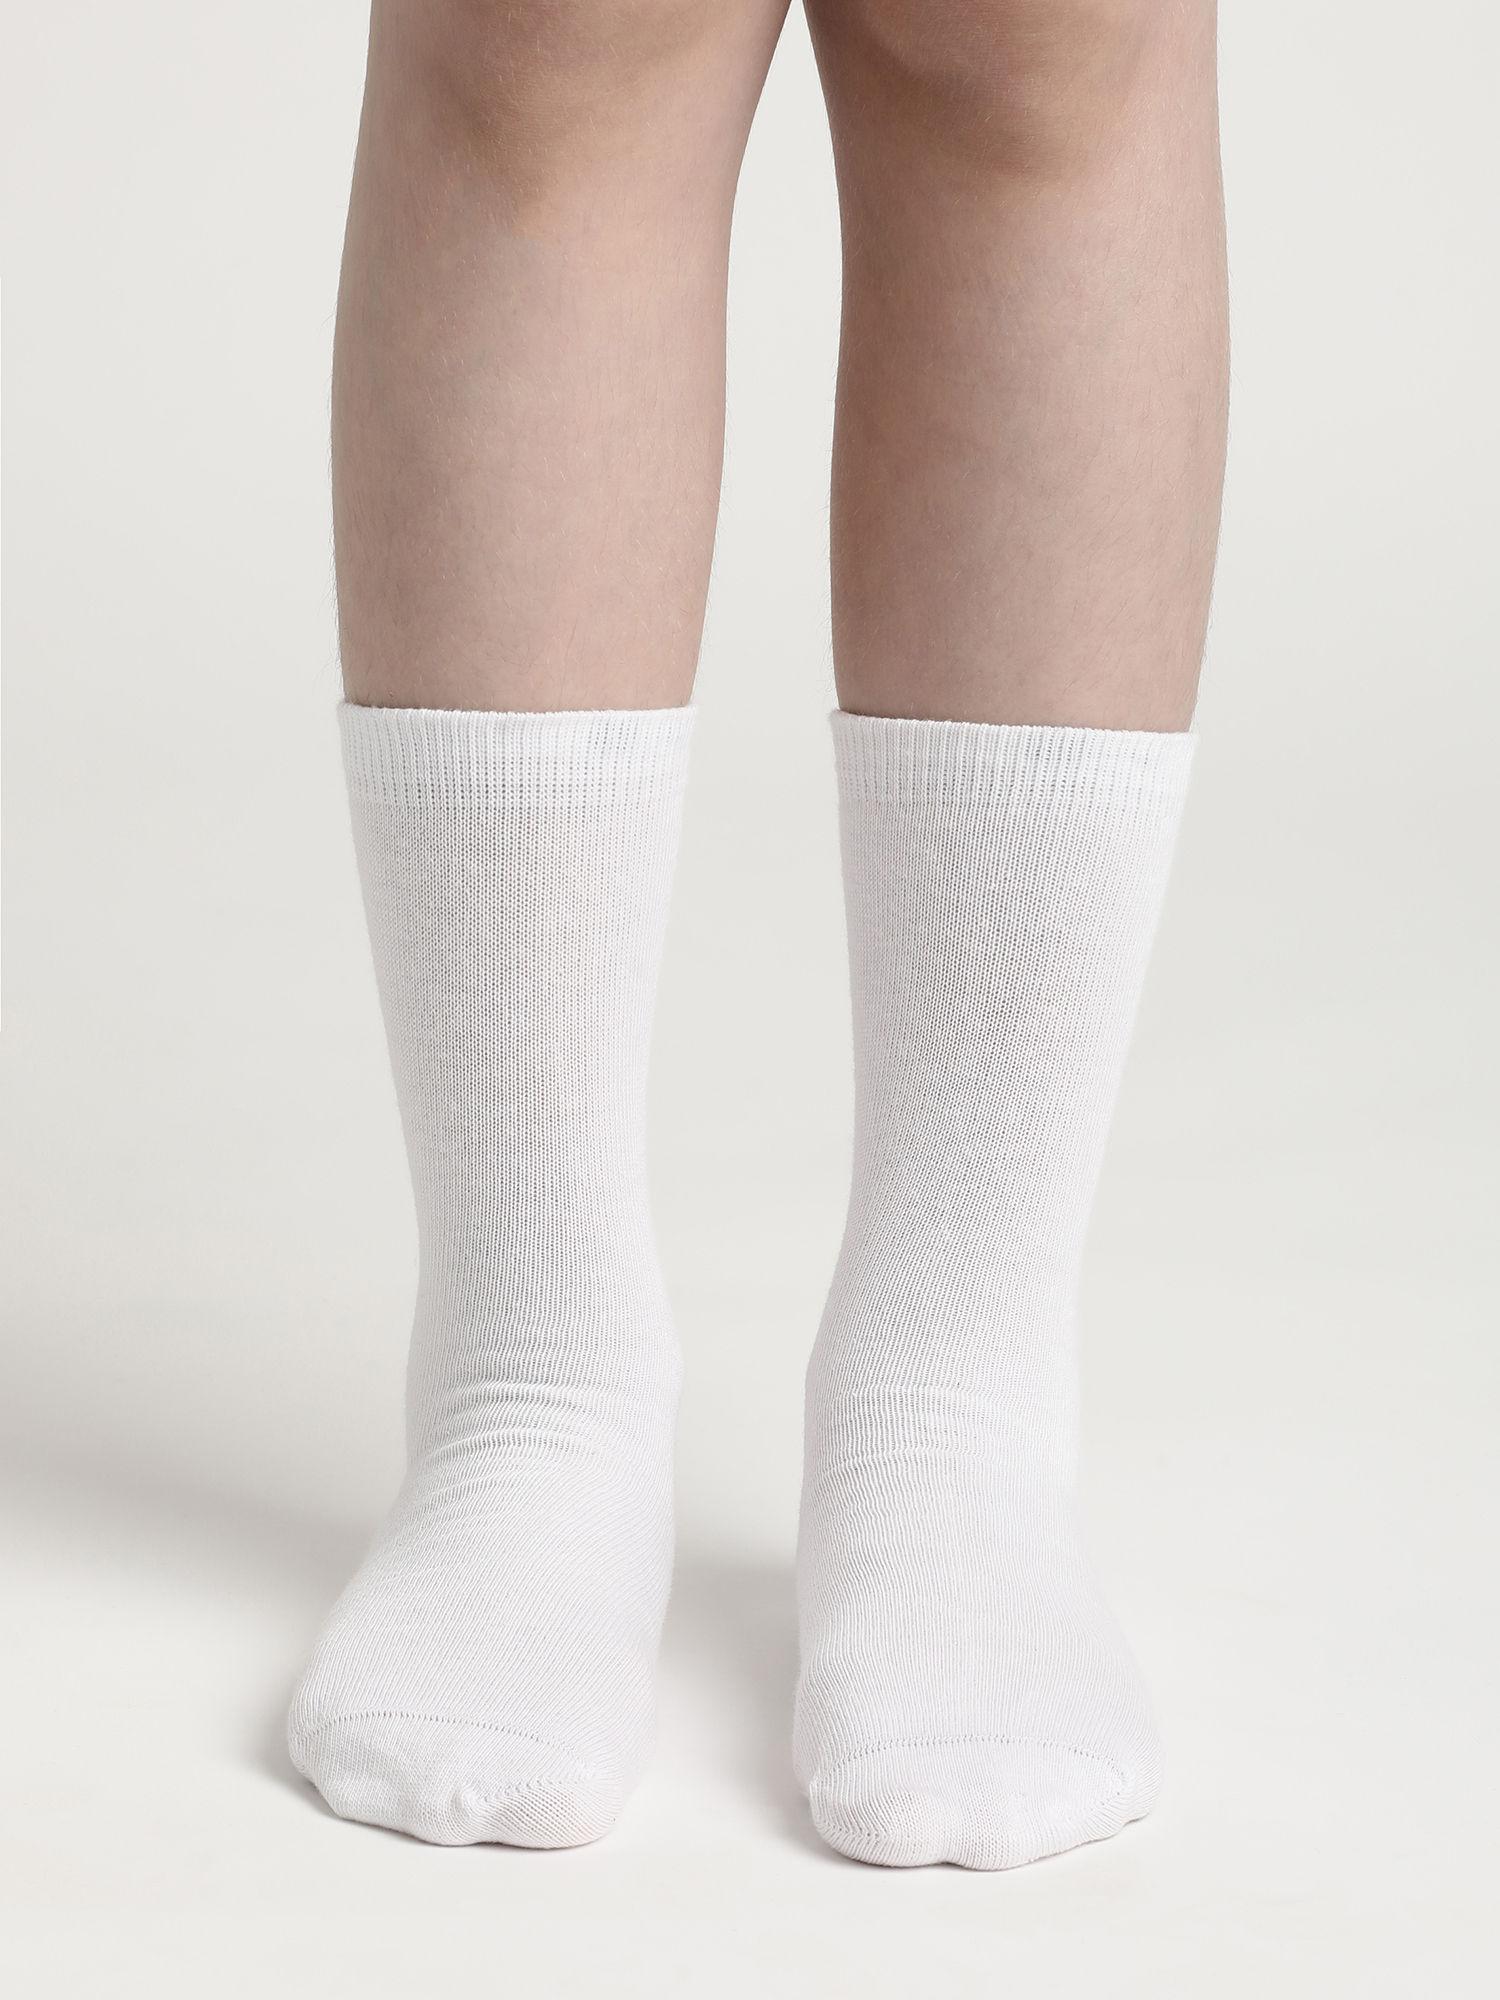 7800 unisex cotton nylon stretch calf length socks - white